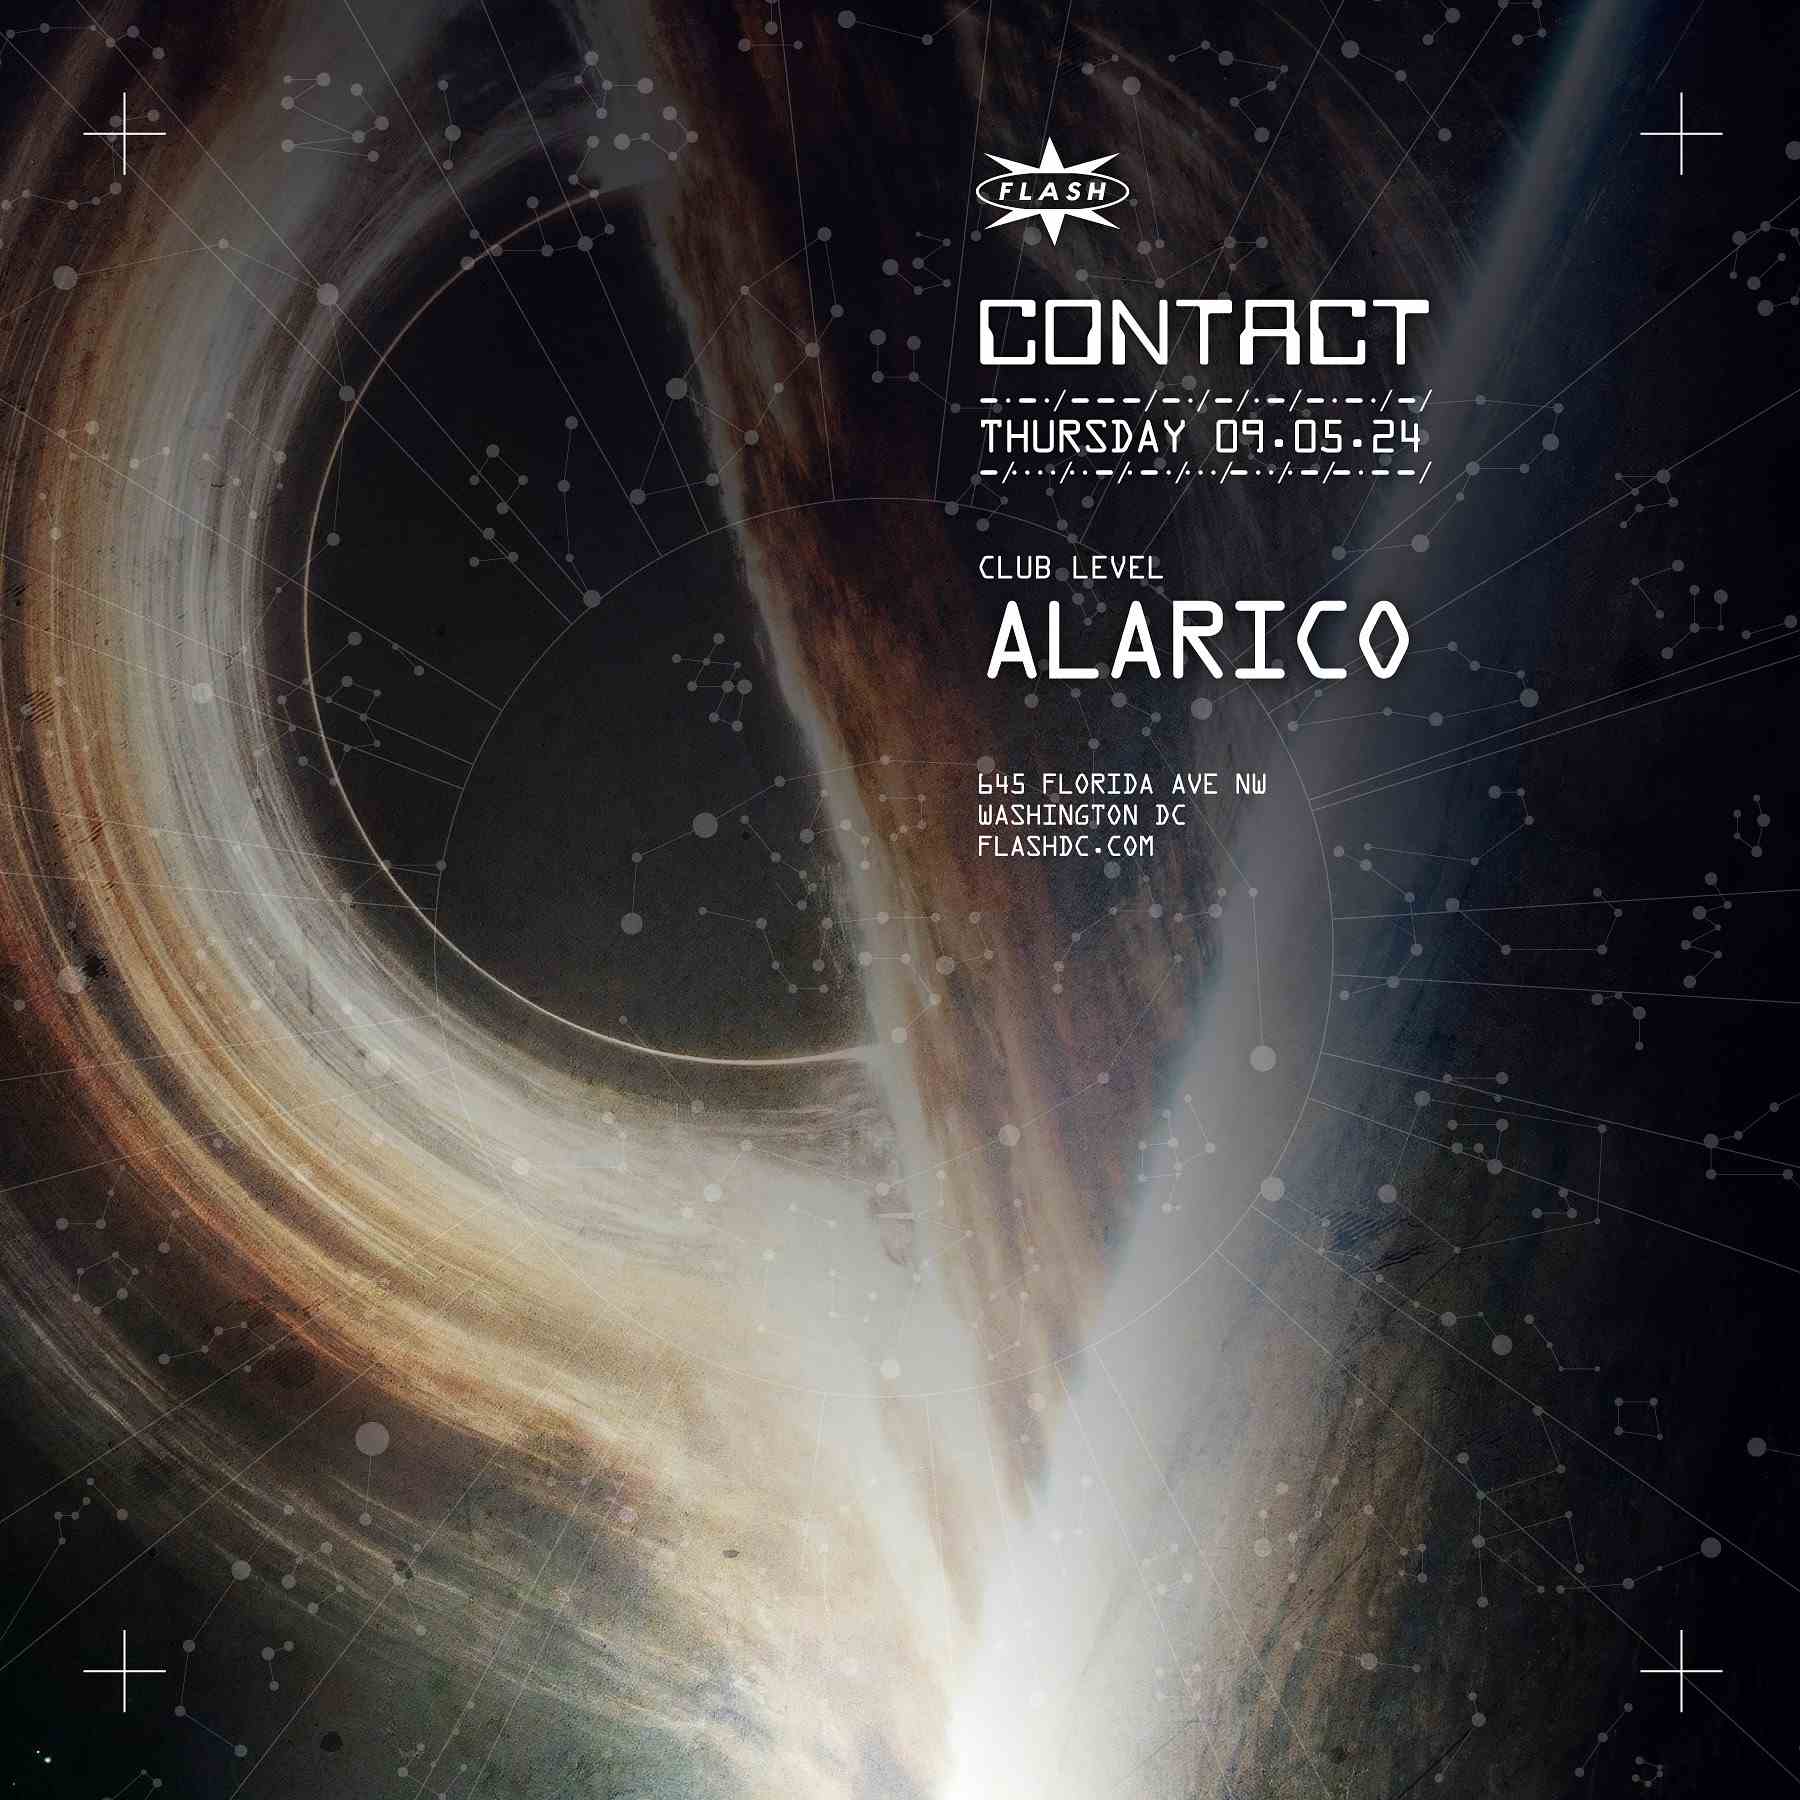 CONTACT: Alarico event flyer